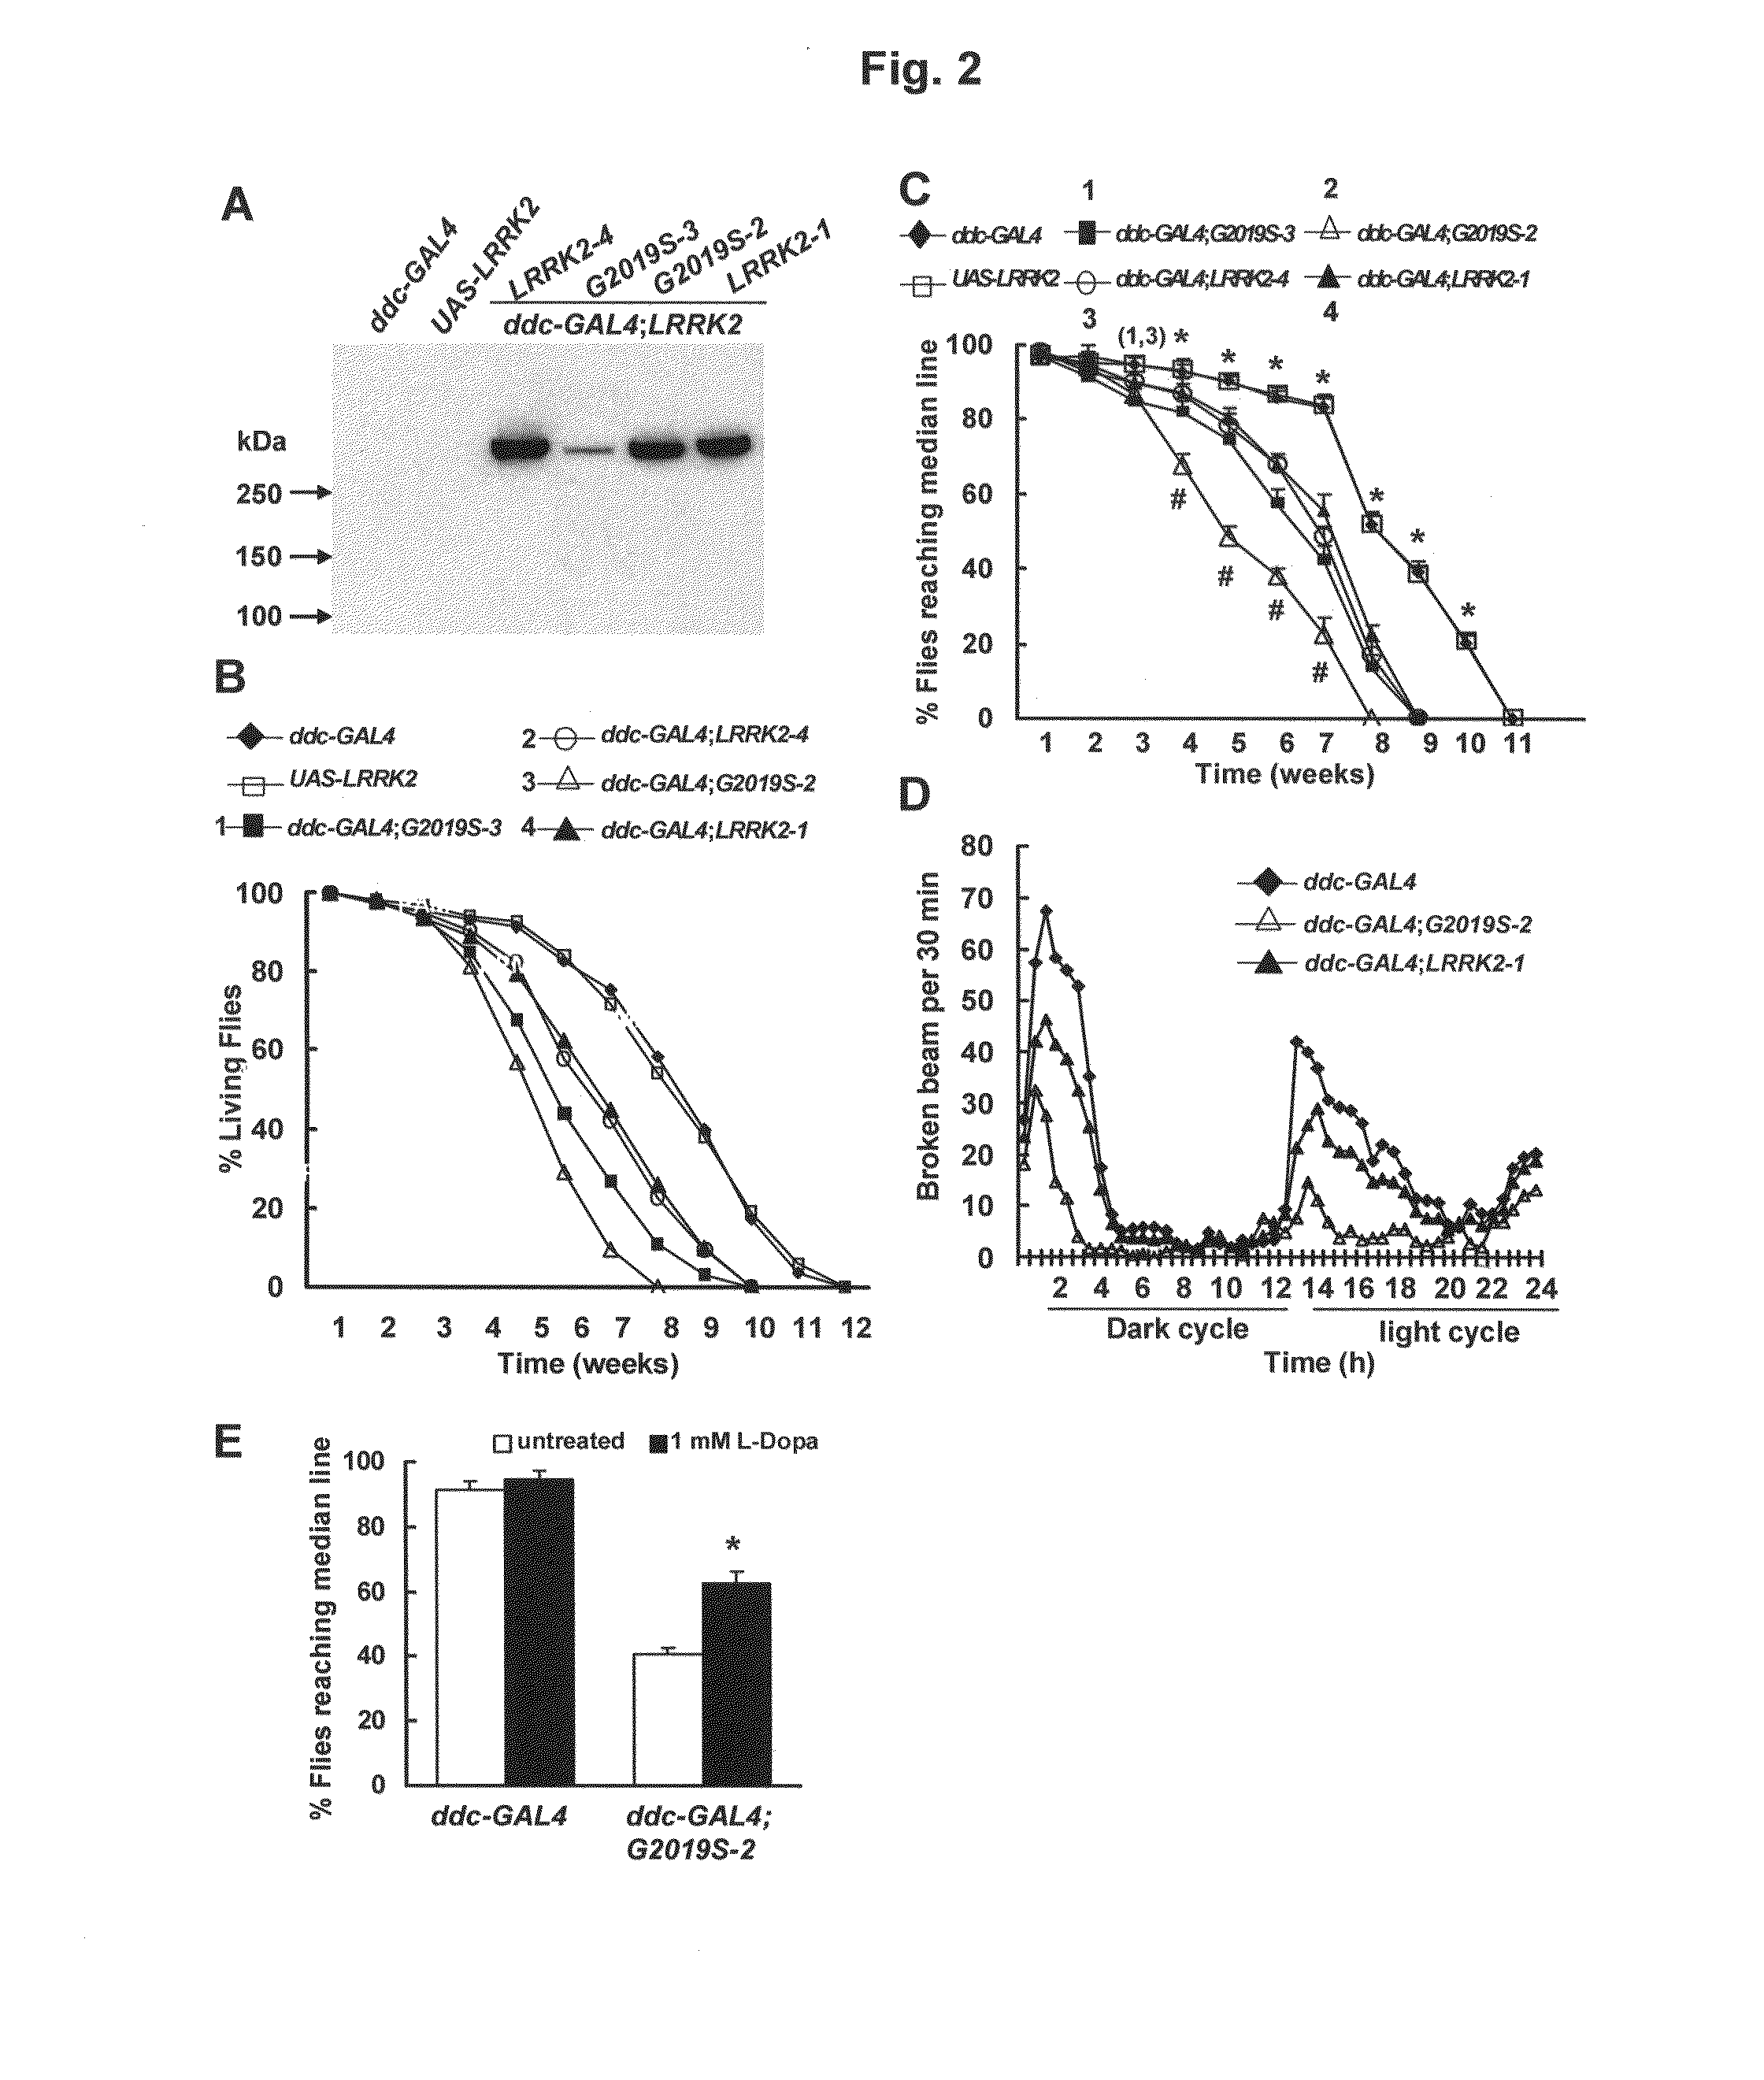 Leucine-rich repeat kinase (LRRK2) drosophila model for parkinson's disease: wildtype1 (WT1) and G2019S mutant flies